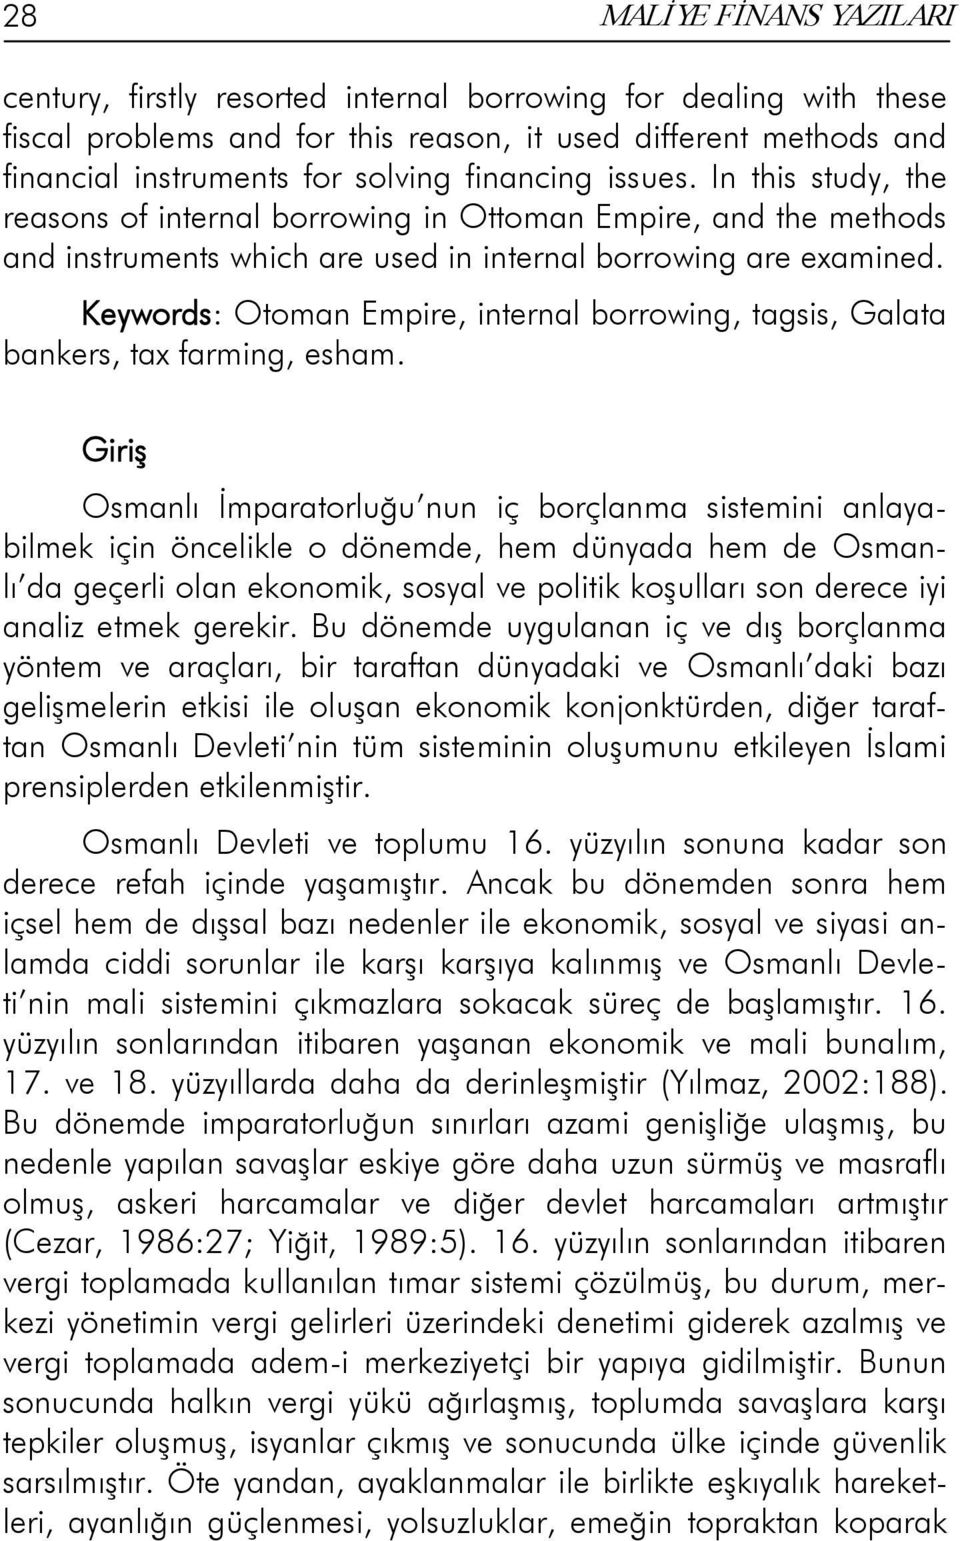 Keywords: Otoman Empire, internal borrowing, tagsis, Galata bankers, tax farming, esham.